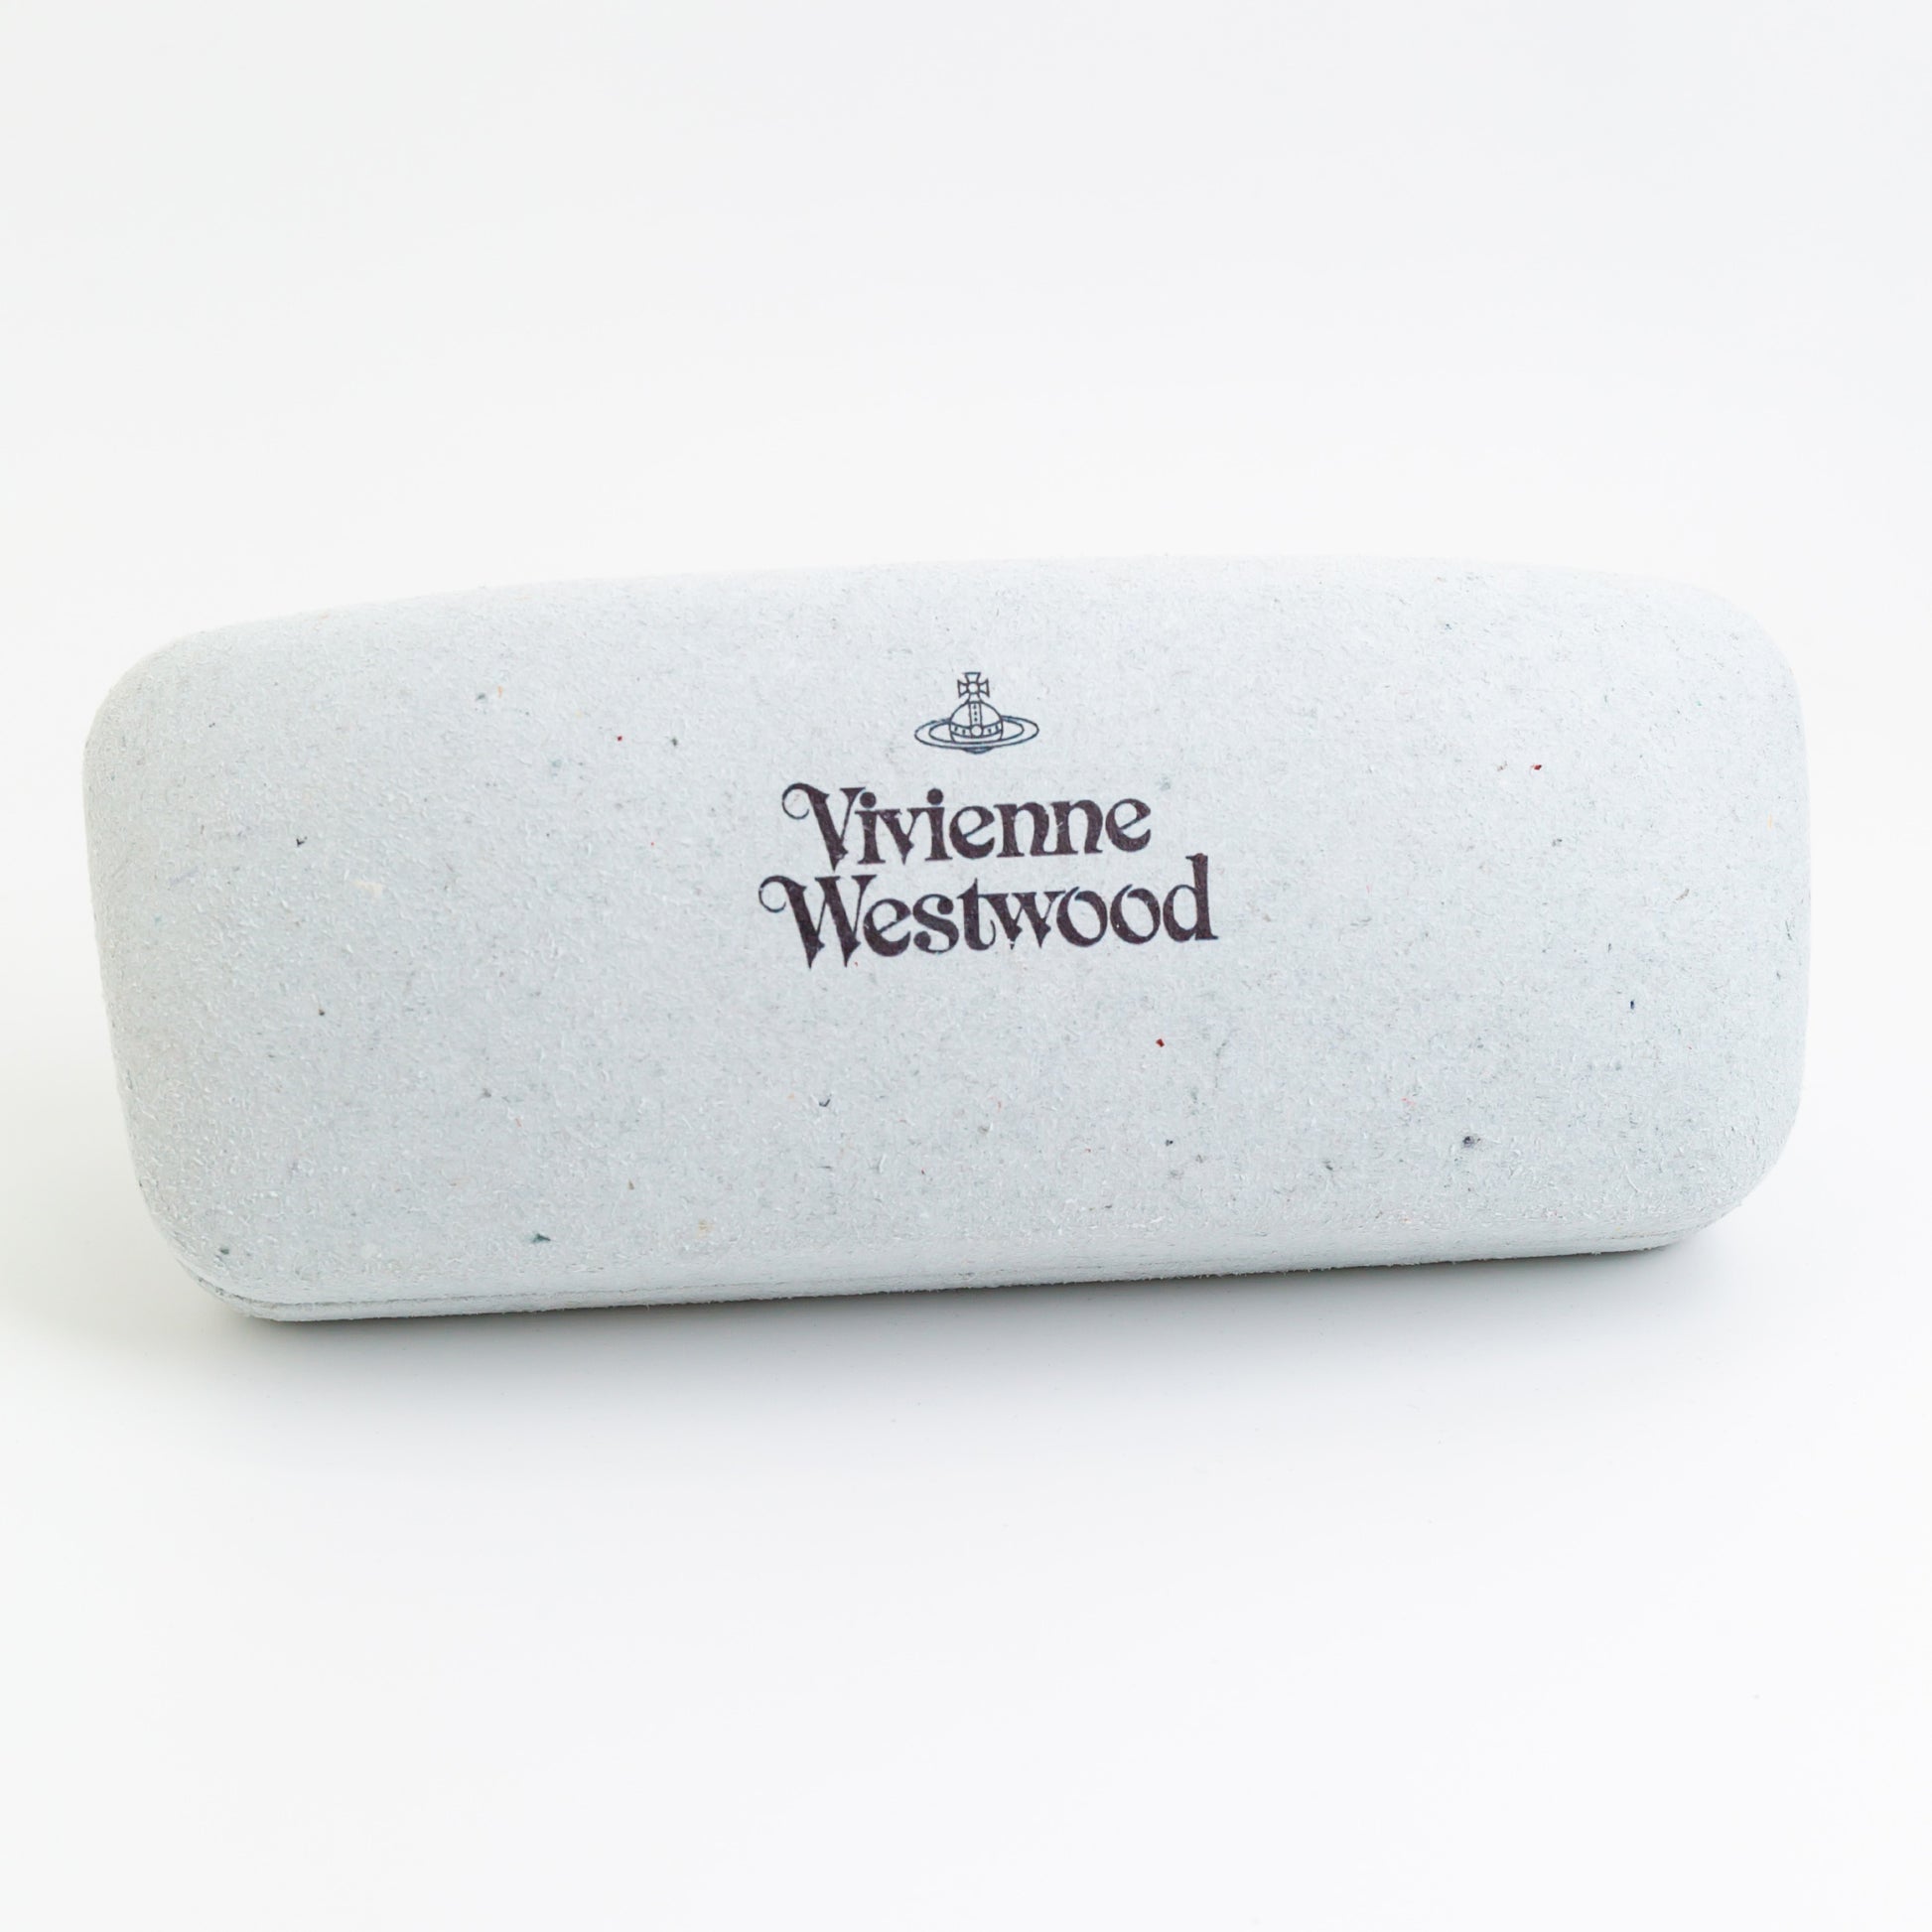  Vivienne Westwood-メガネケース